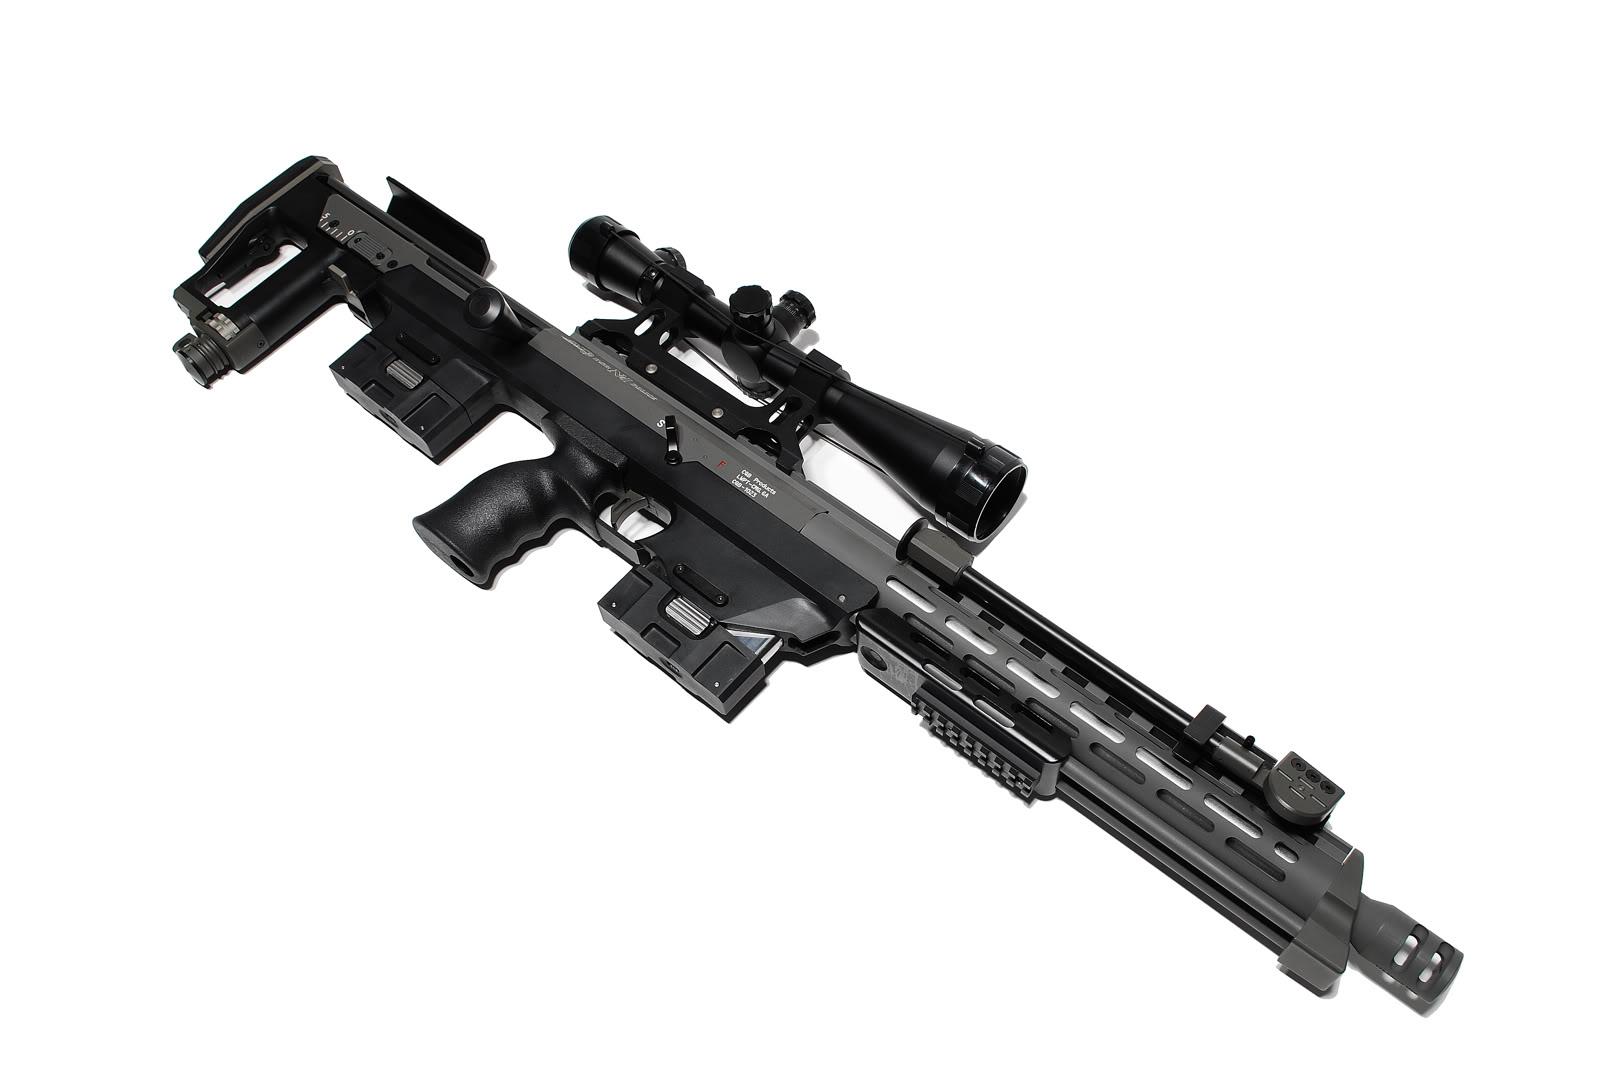 AMPDSR-1狙擊步槍